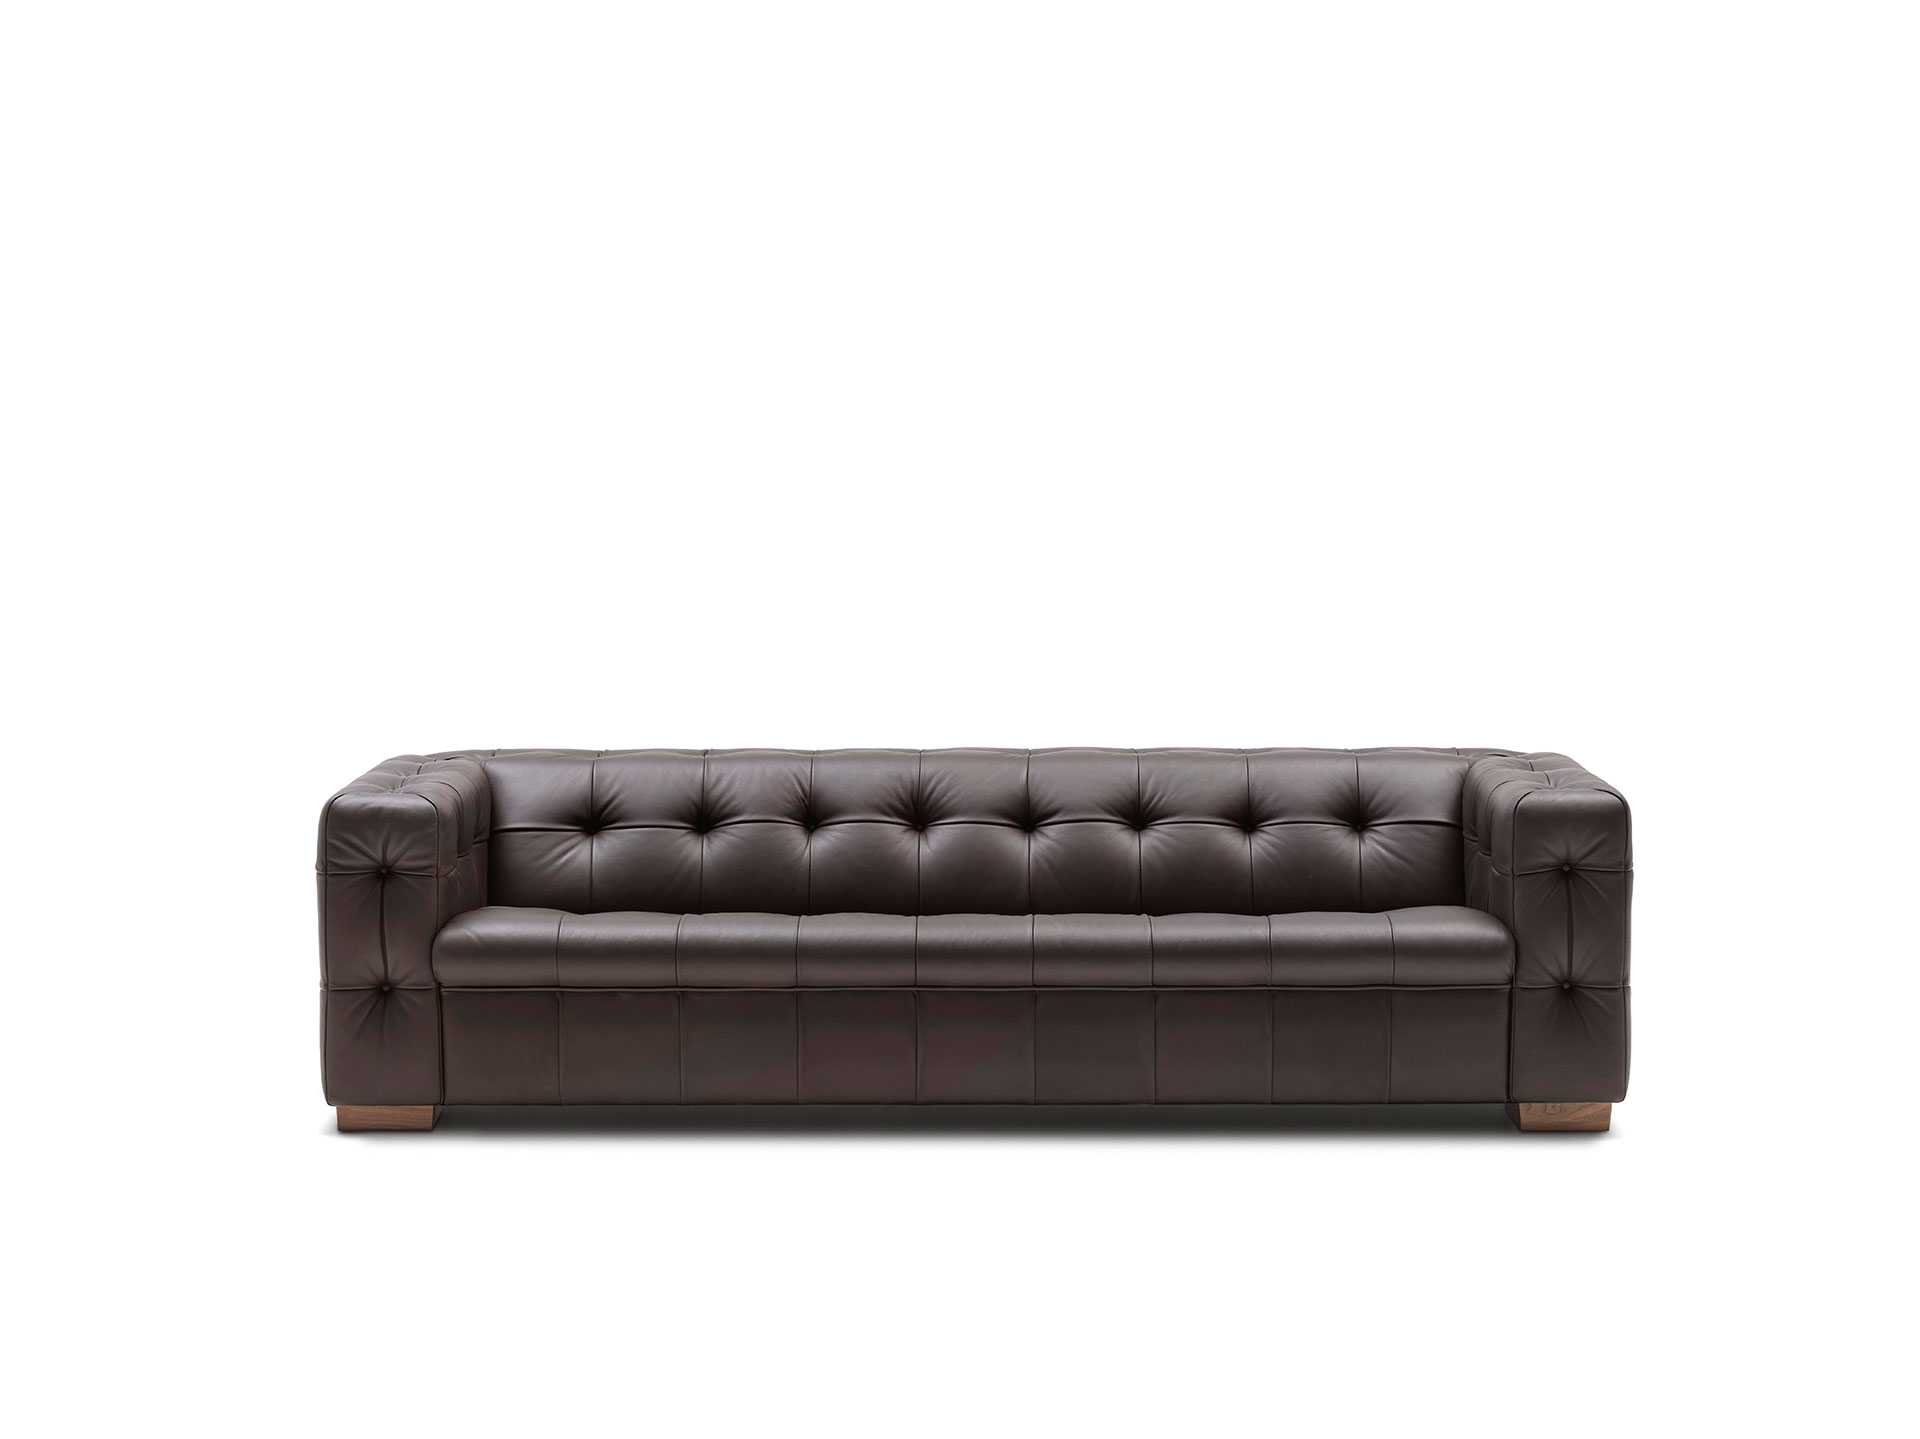 RH-306 Sofa